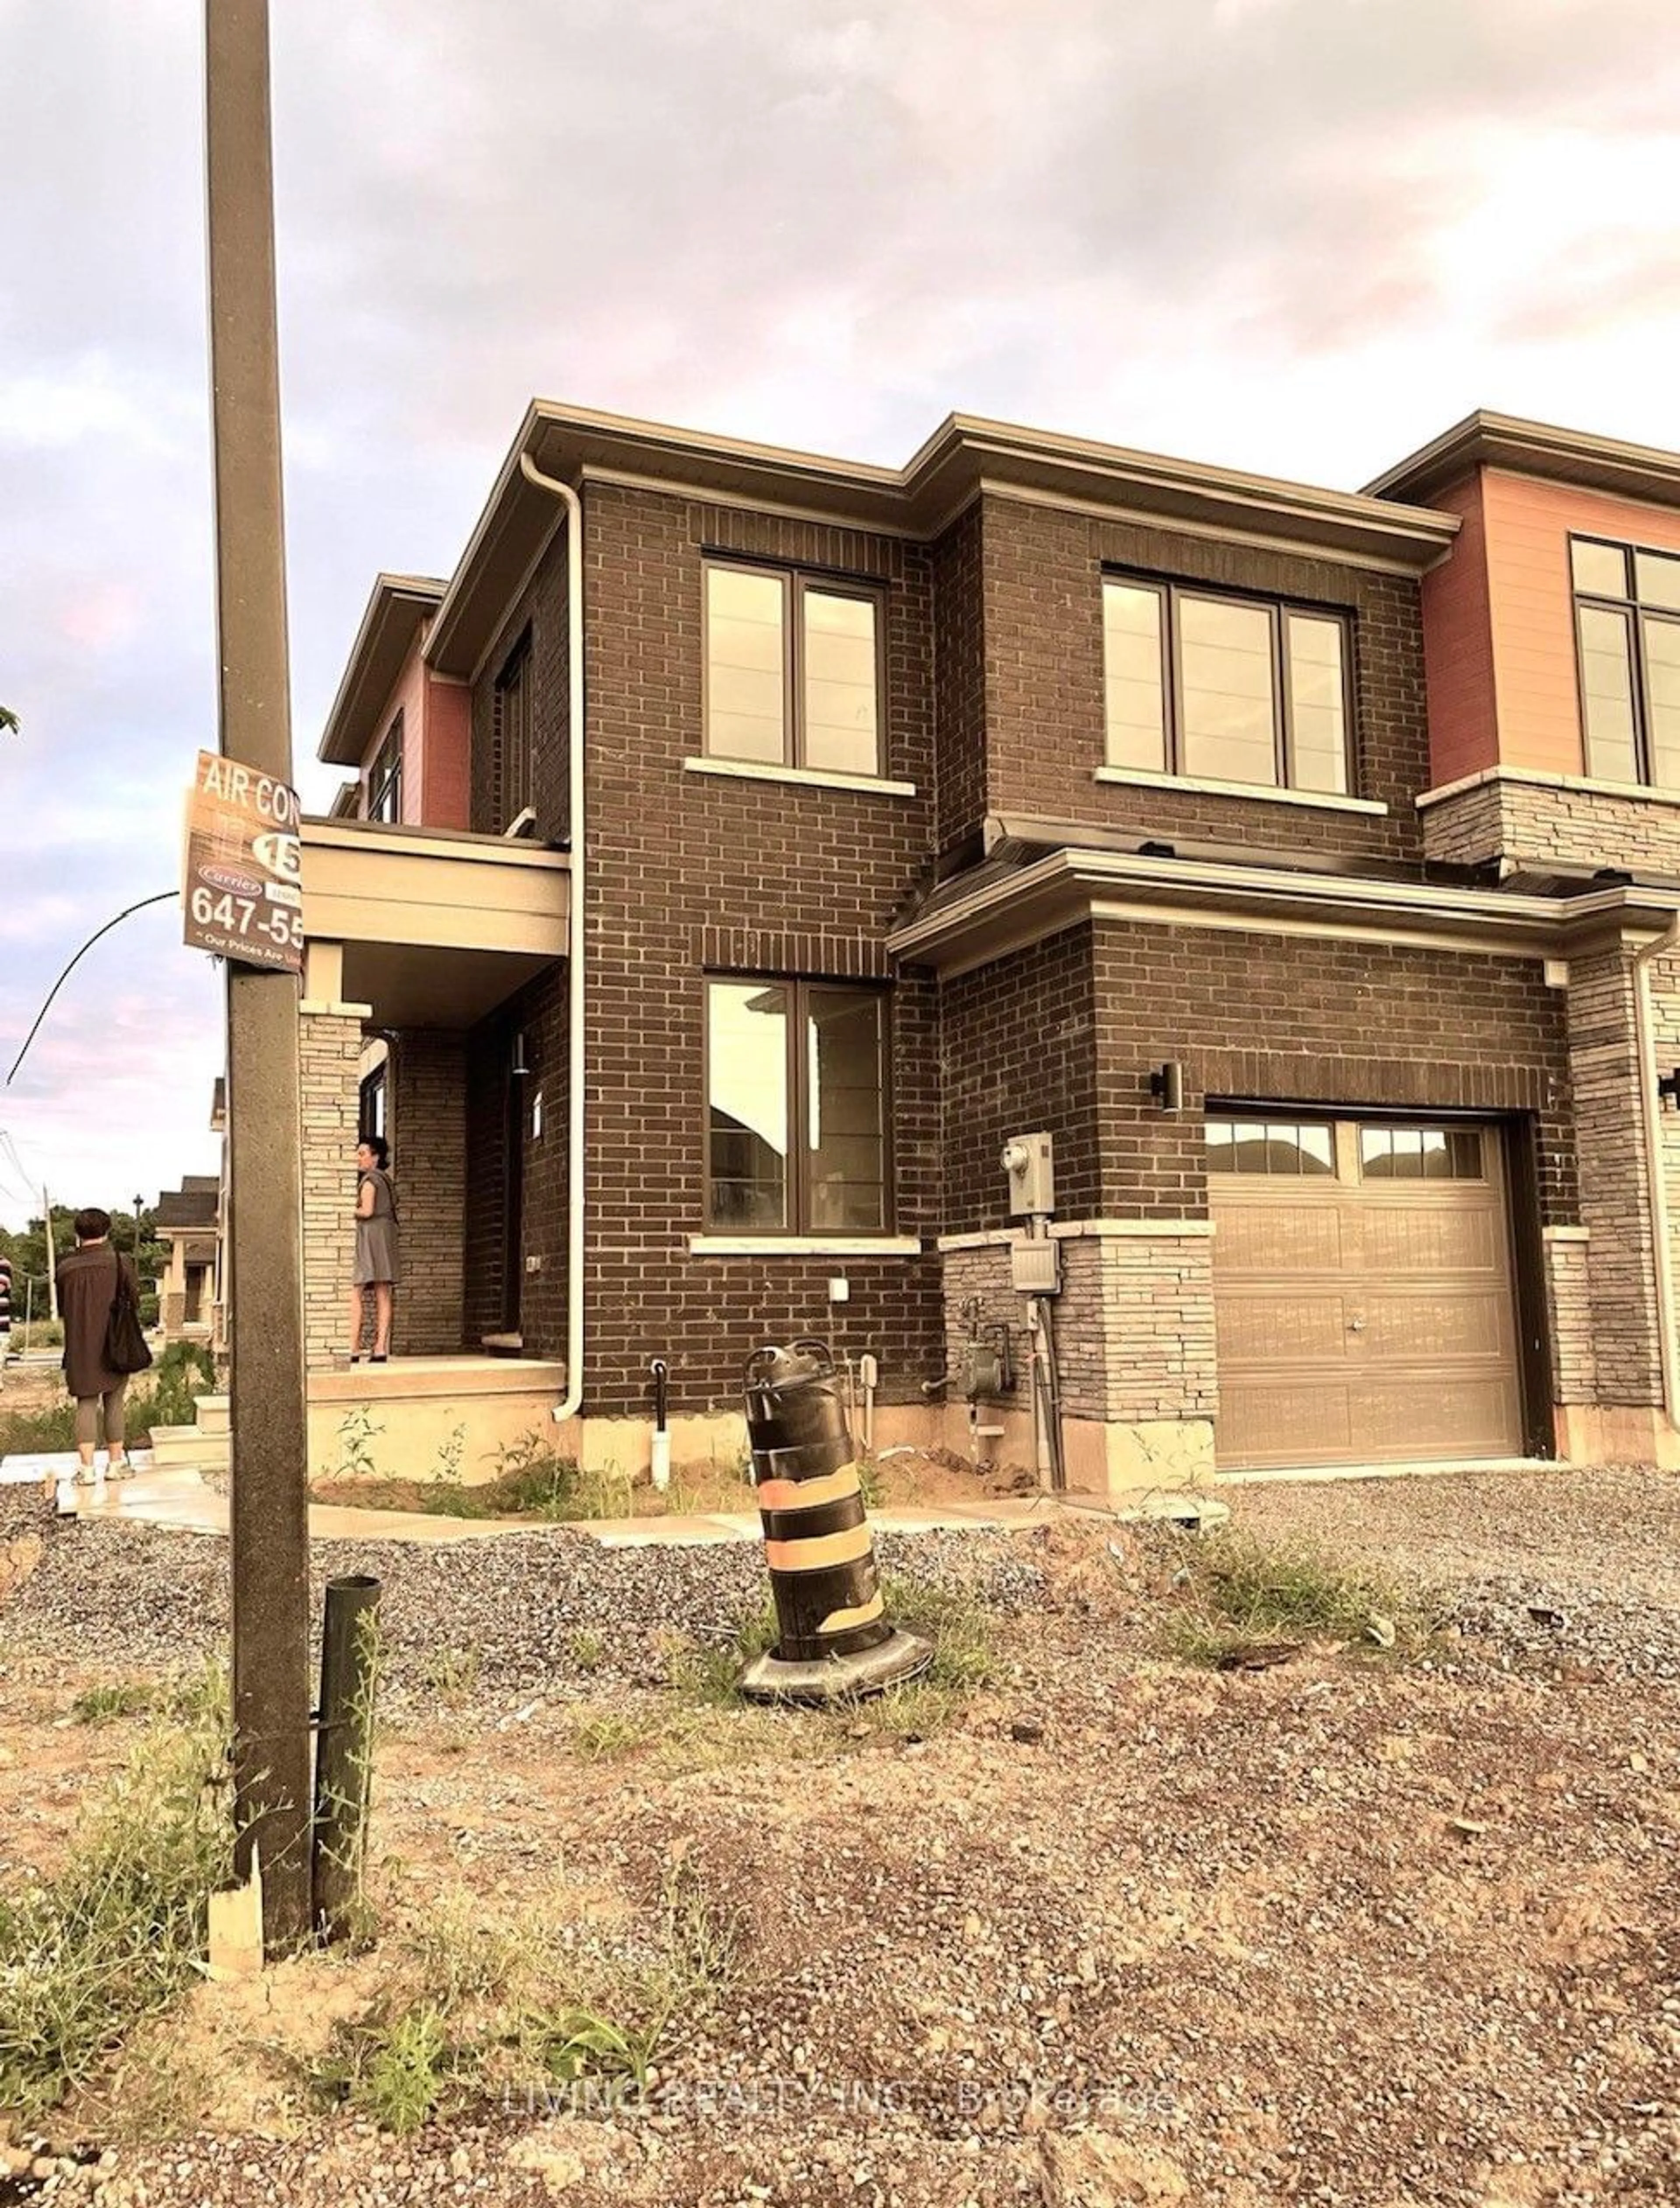 Home with brick exterior material for 7789 Kalar Rd #1, Niagara Falls Ontario L2H 3T8